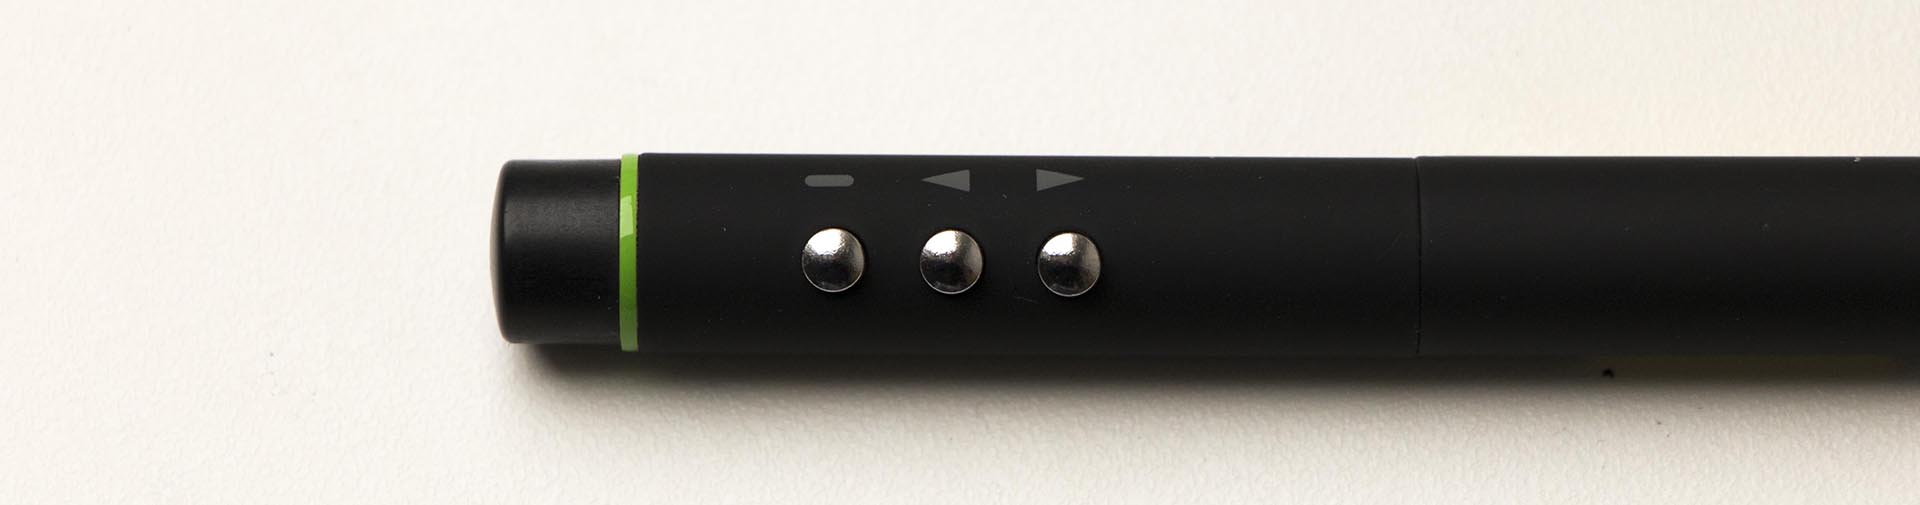 Leitz Pro Presenter Stylus Pen Buttons